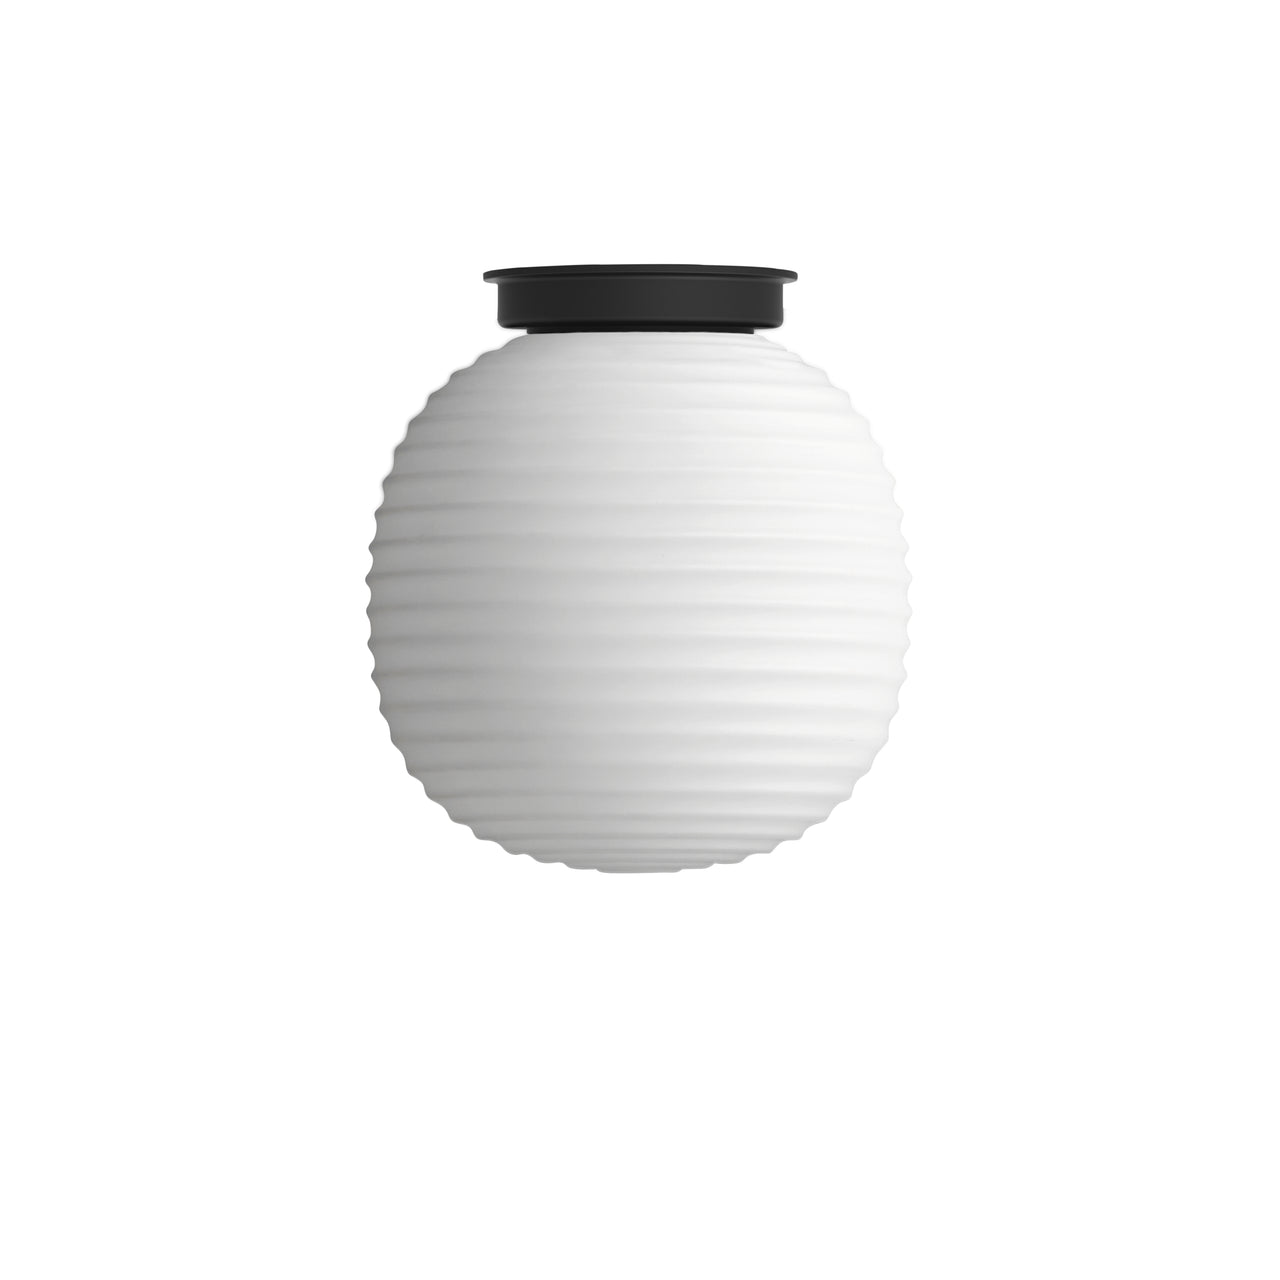 Lantern Ceiling Lamp: Small - 7.9